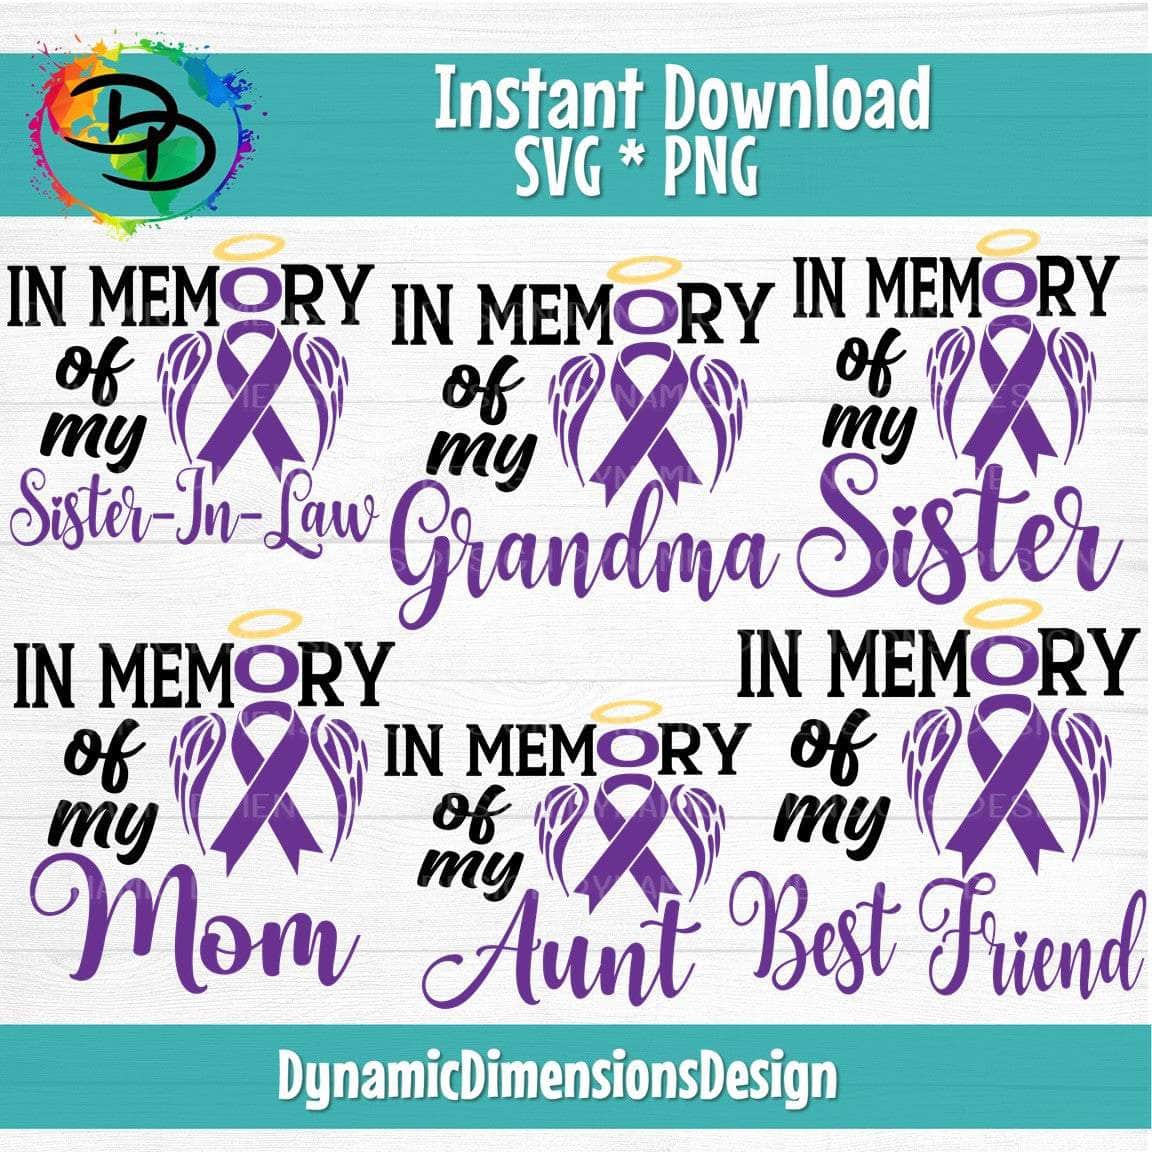 In Memory Pancreatic Cancer Bundle svg, png, instant download, dxf, eps, pdf, jpg, cricut, silhouette, sublimtion, printable